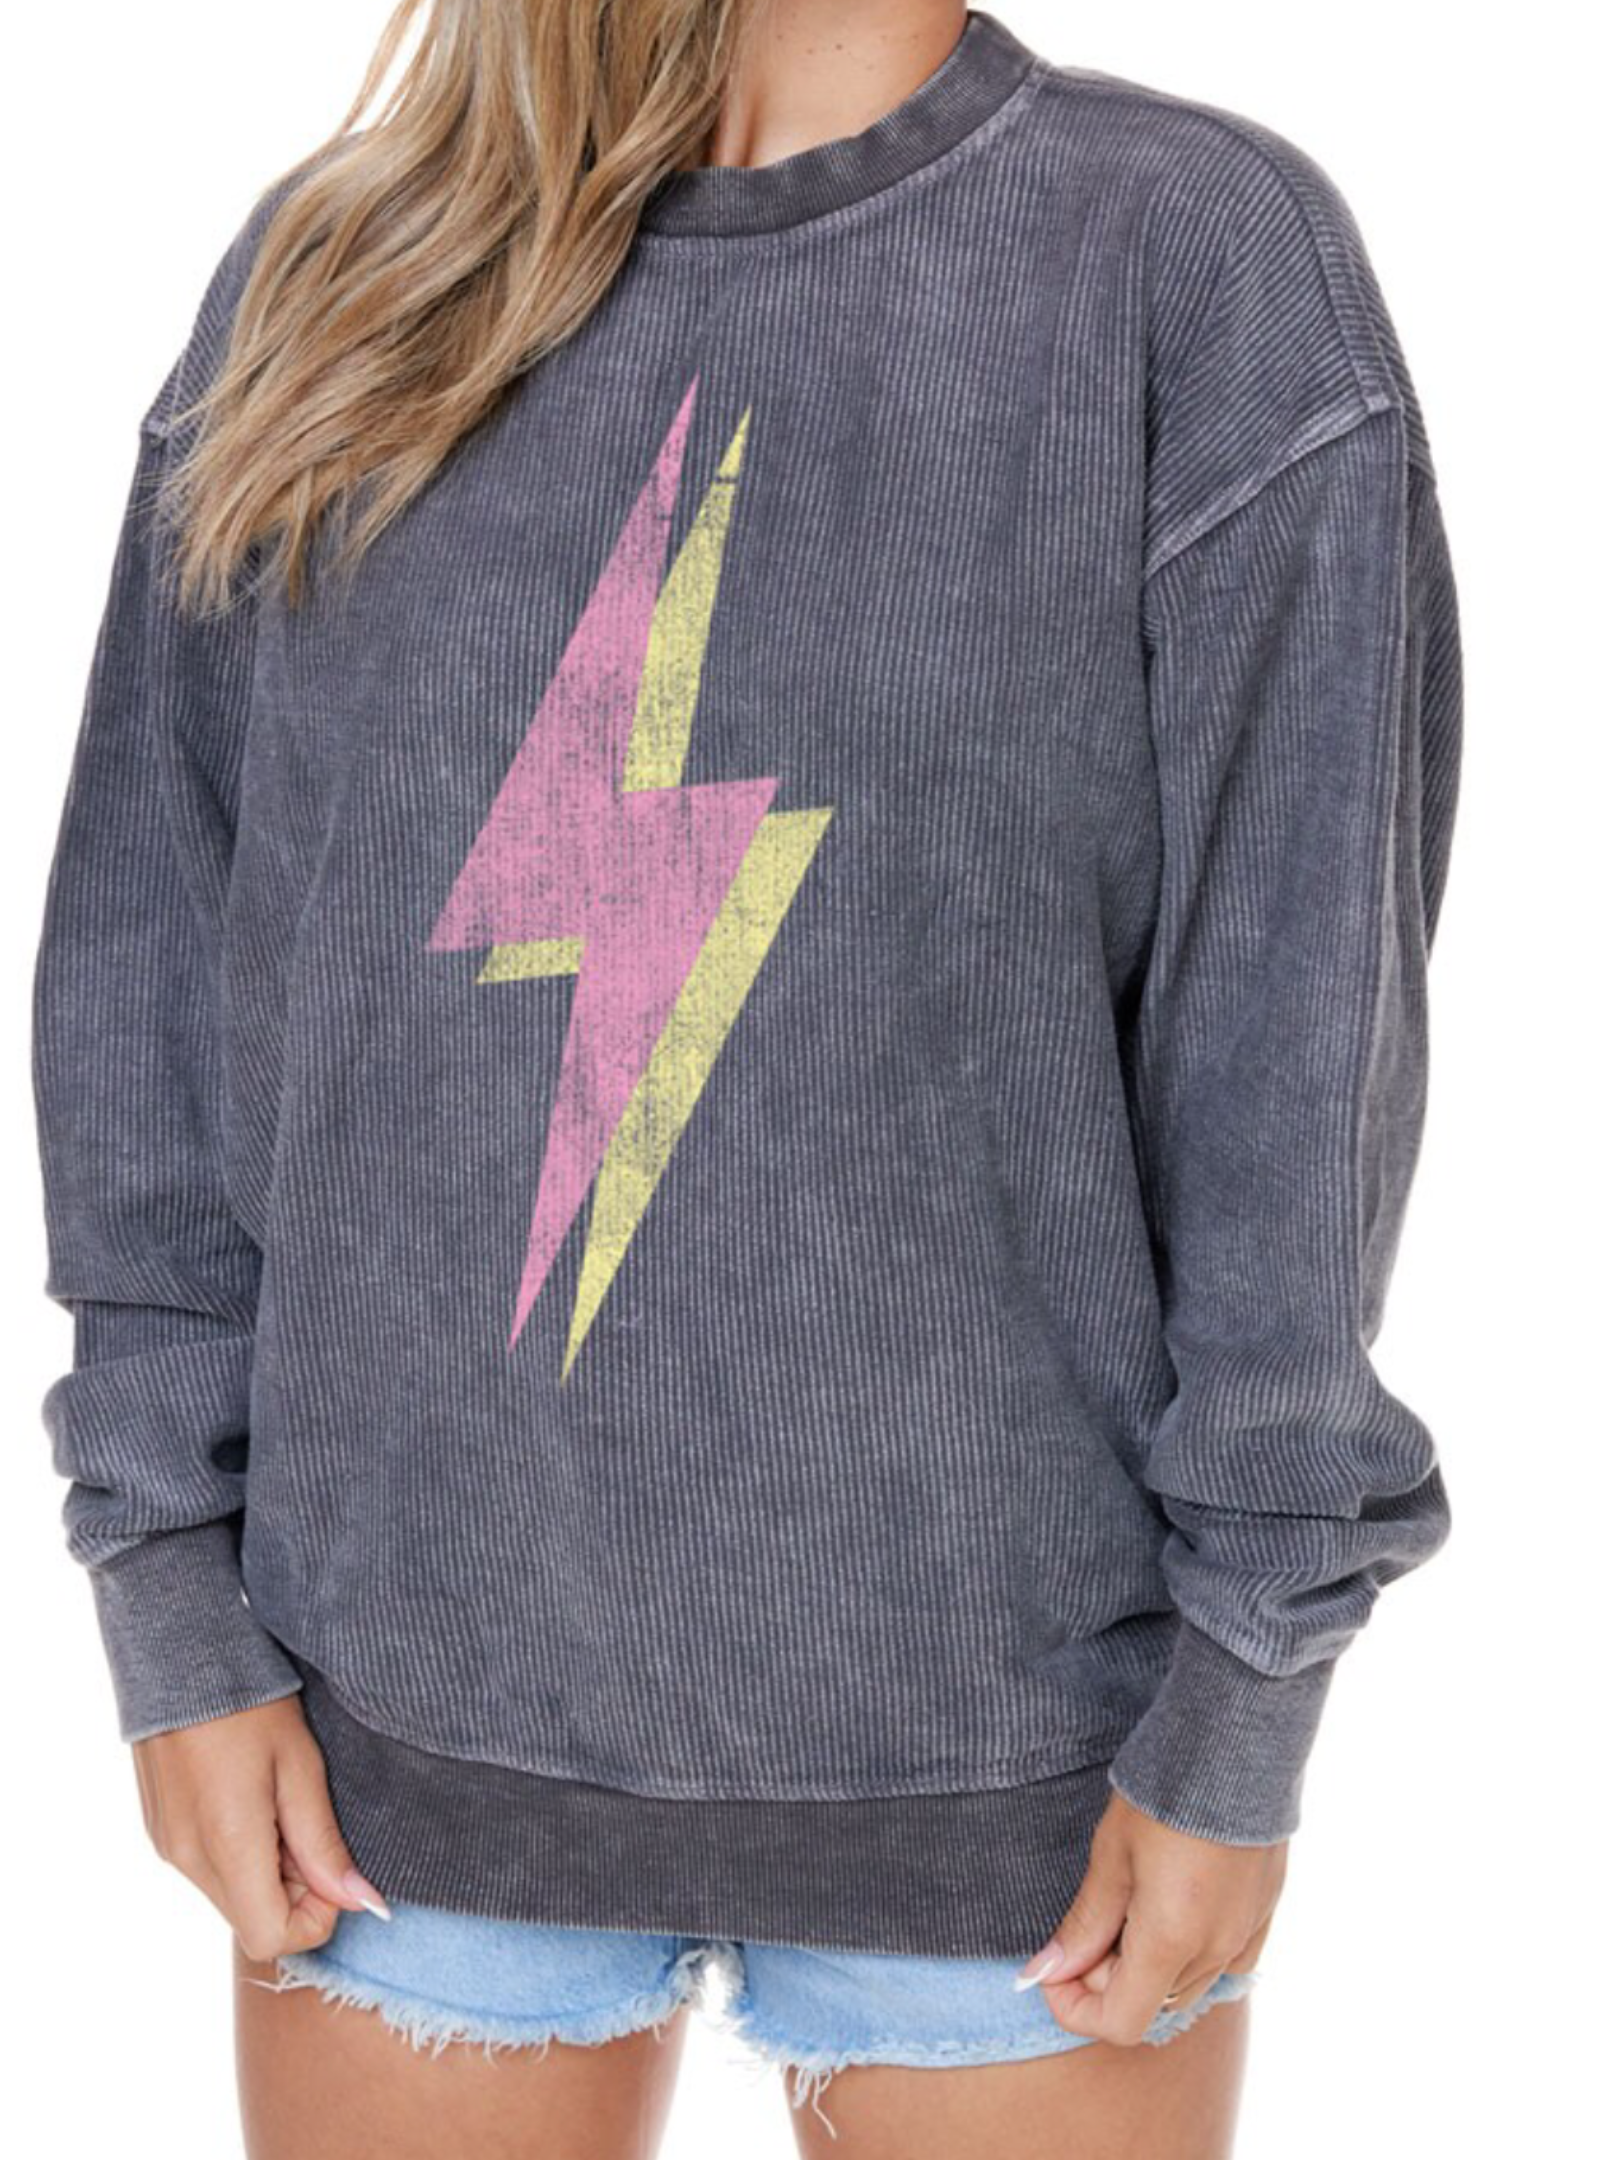 Lightening Bolt Graphic Sweatshirt